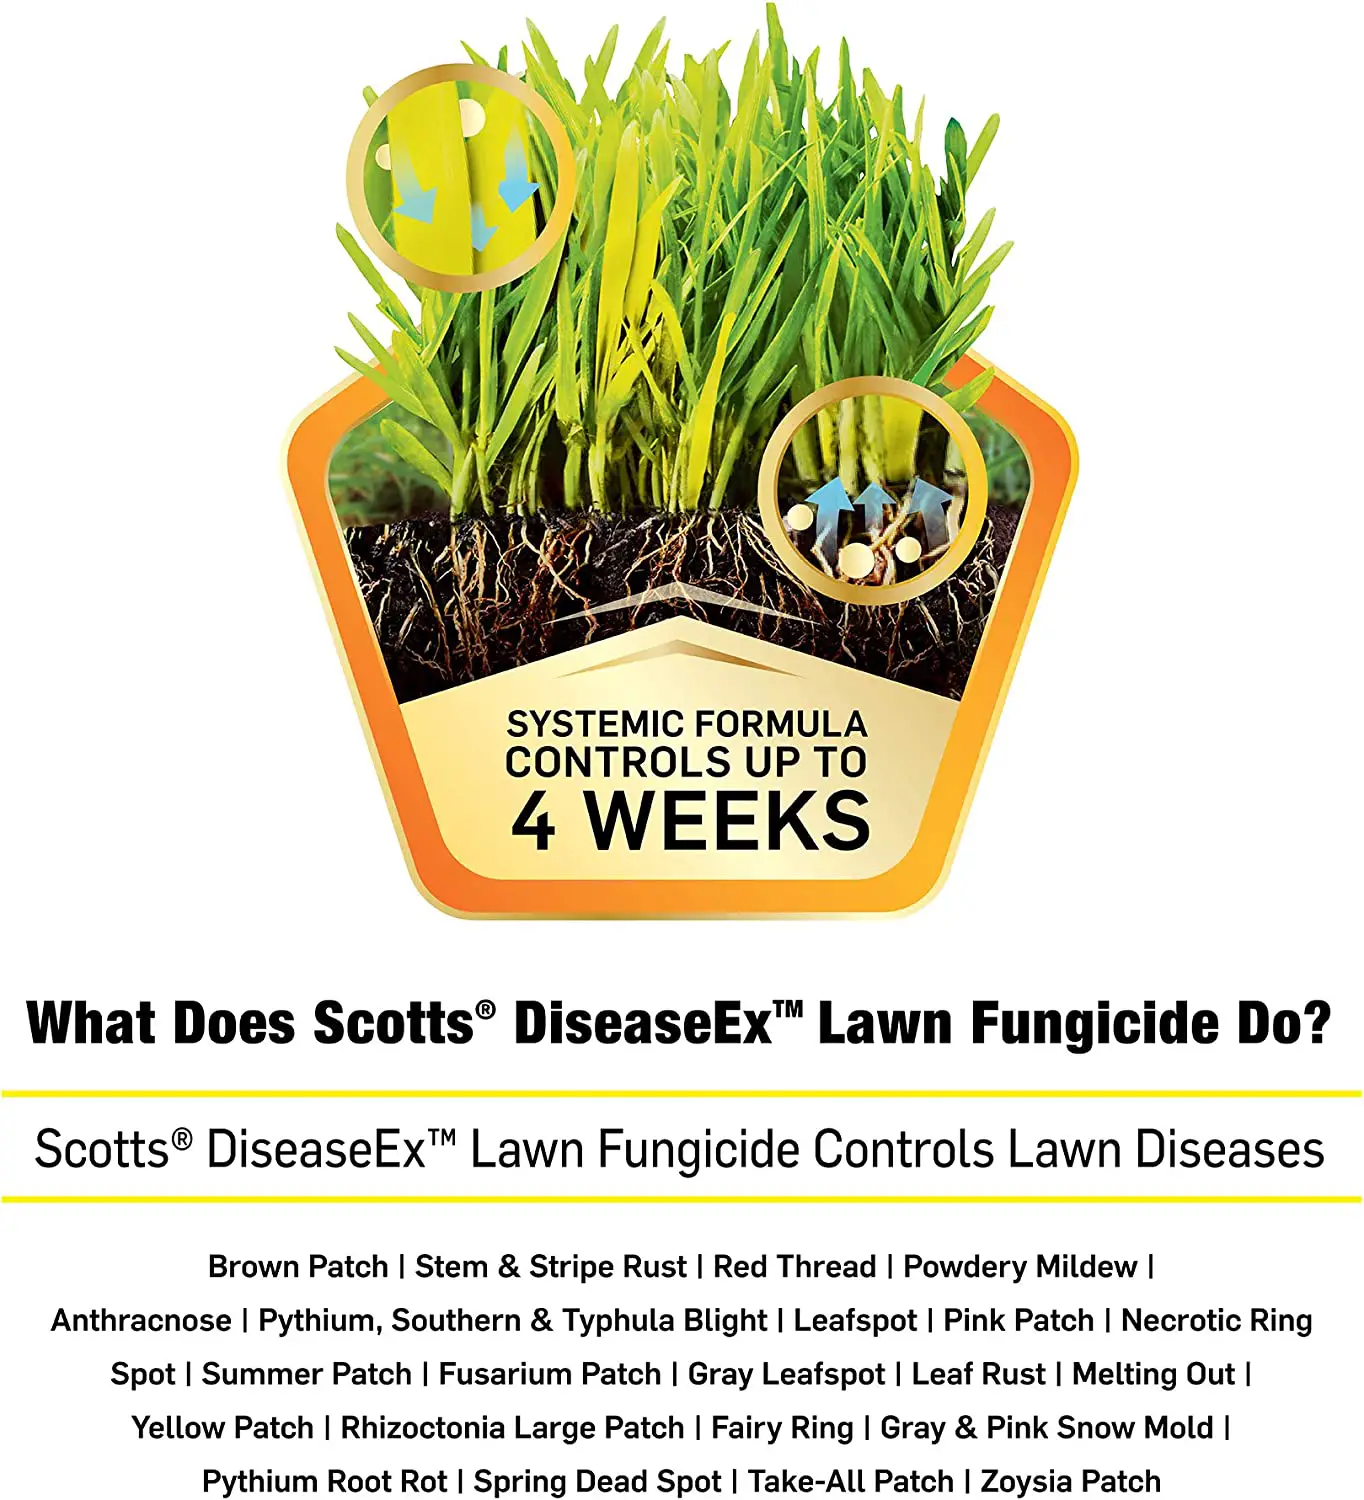 Buy Scotts DiseaseEx Lawn Fungicide